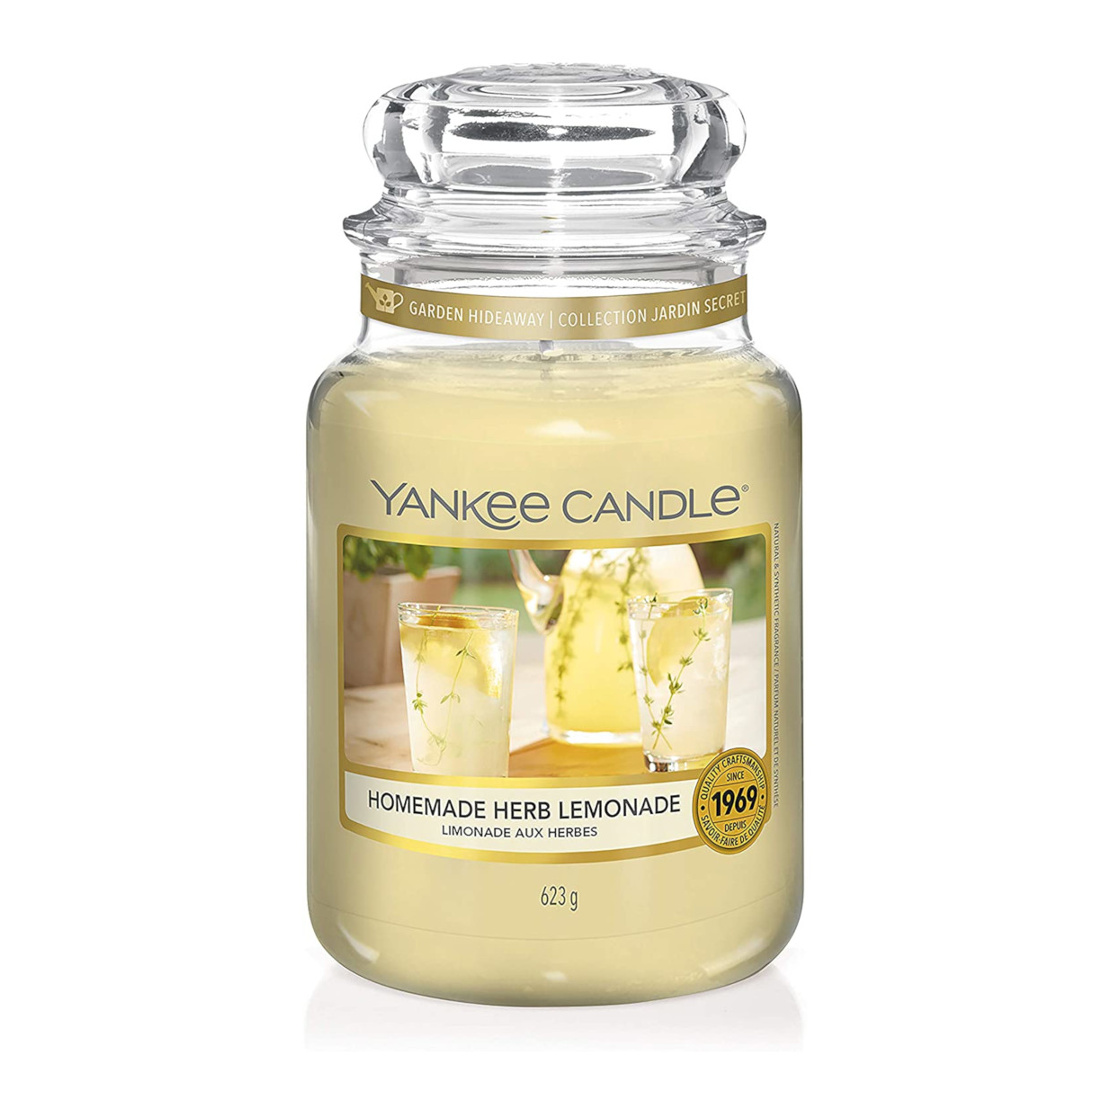 Yankee Candle Homemade Herb Lemonade Large Jar